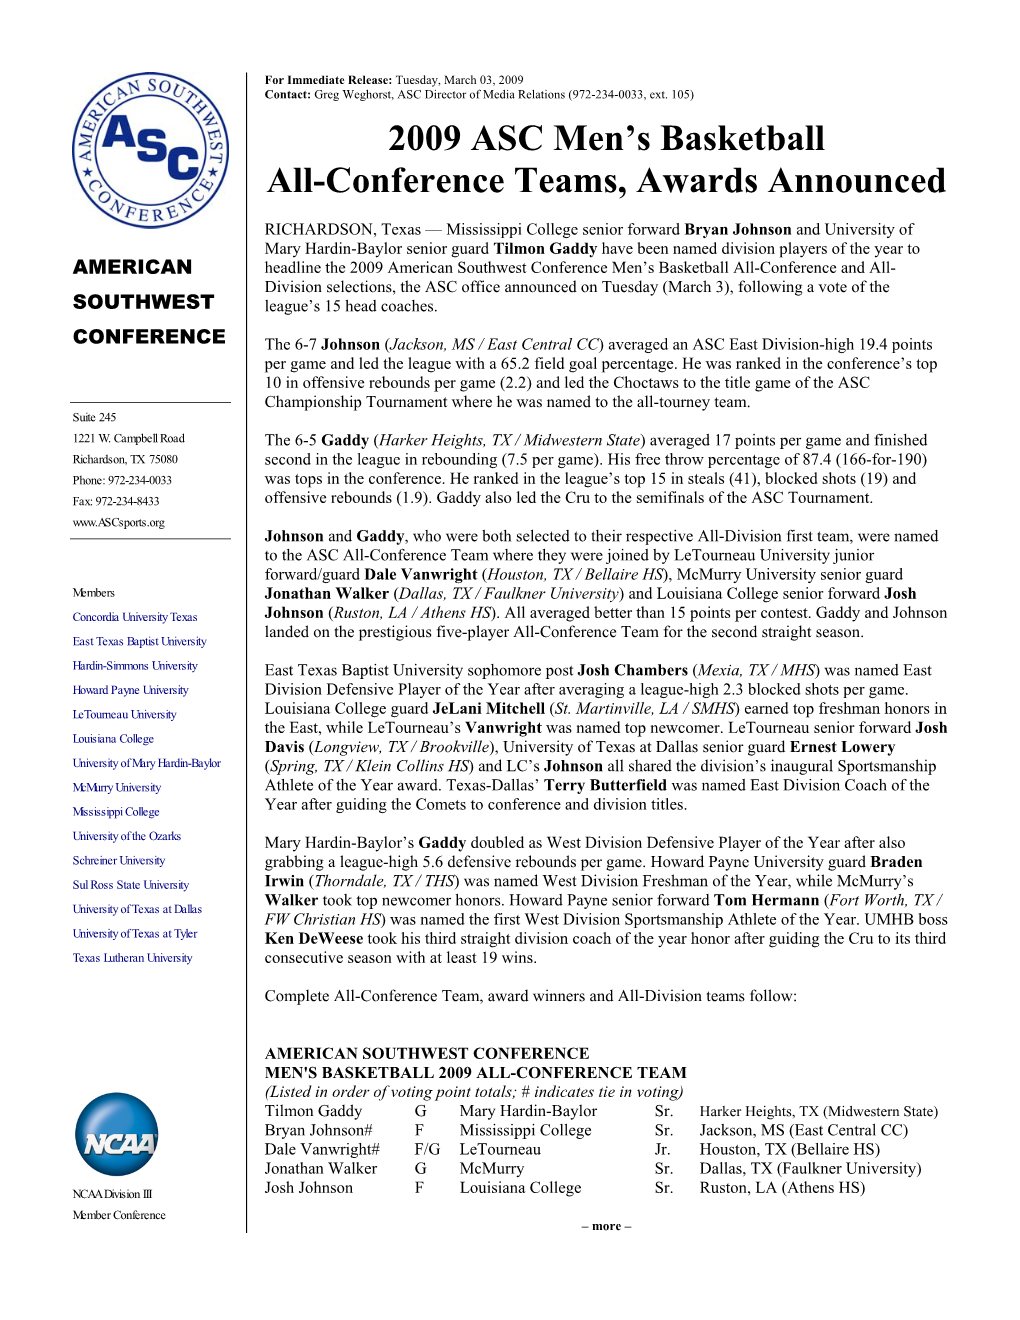 2009 ASC Men's Basketball All-Conference Teams, Awards